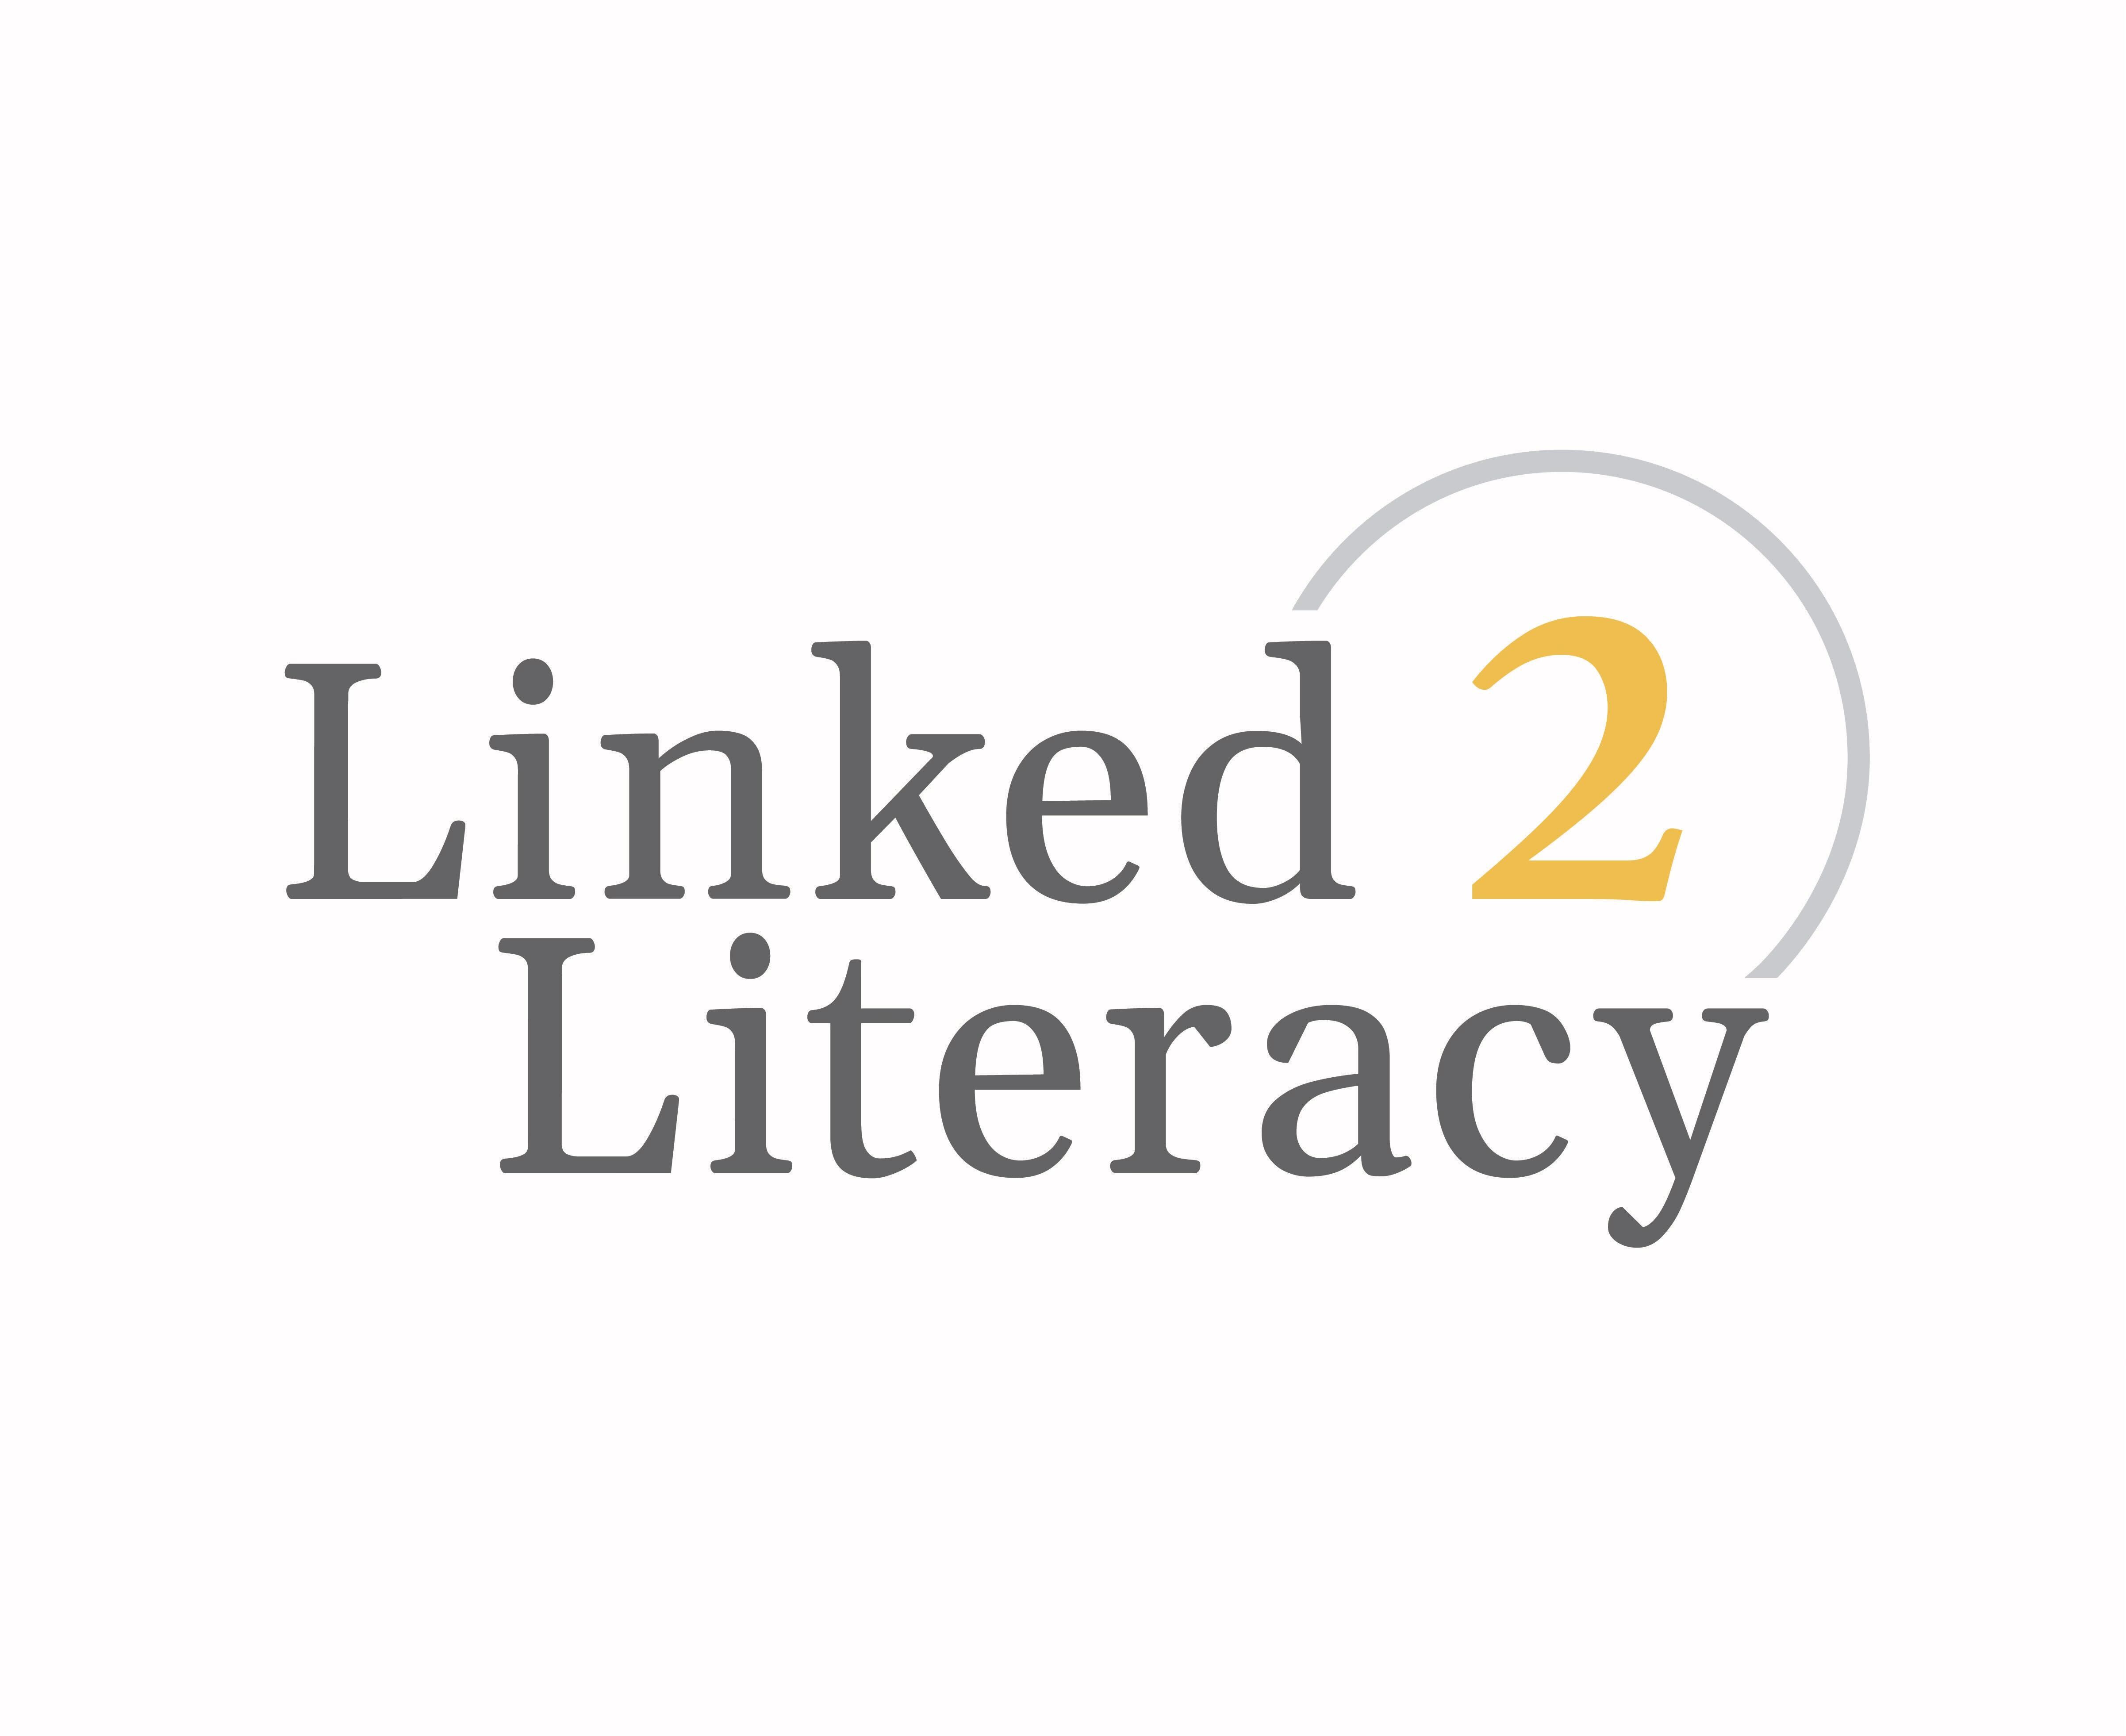 Linked2Literacy logo